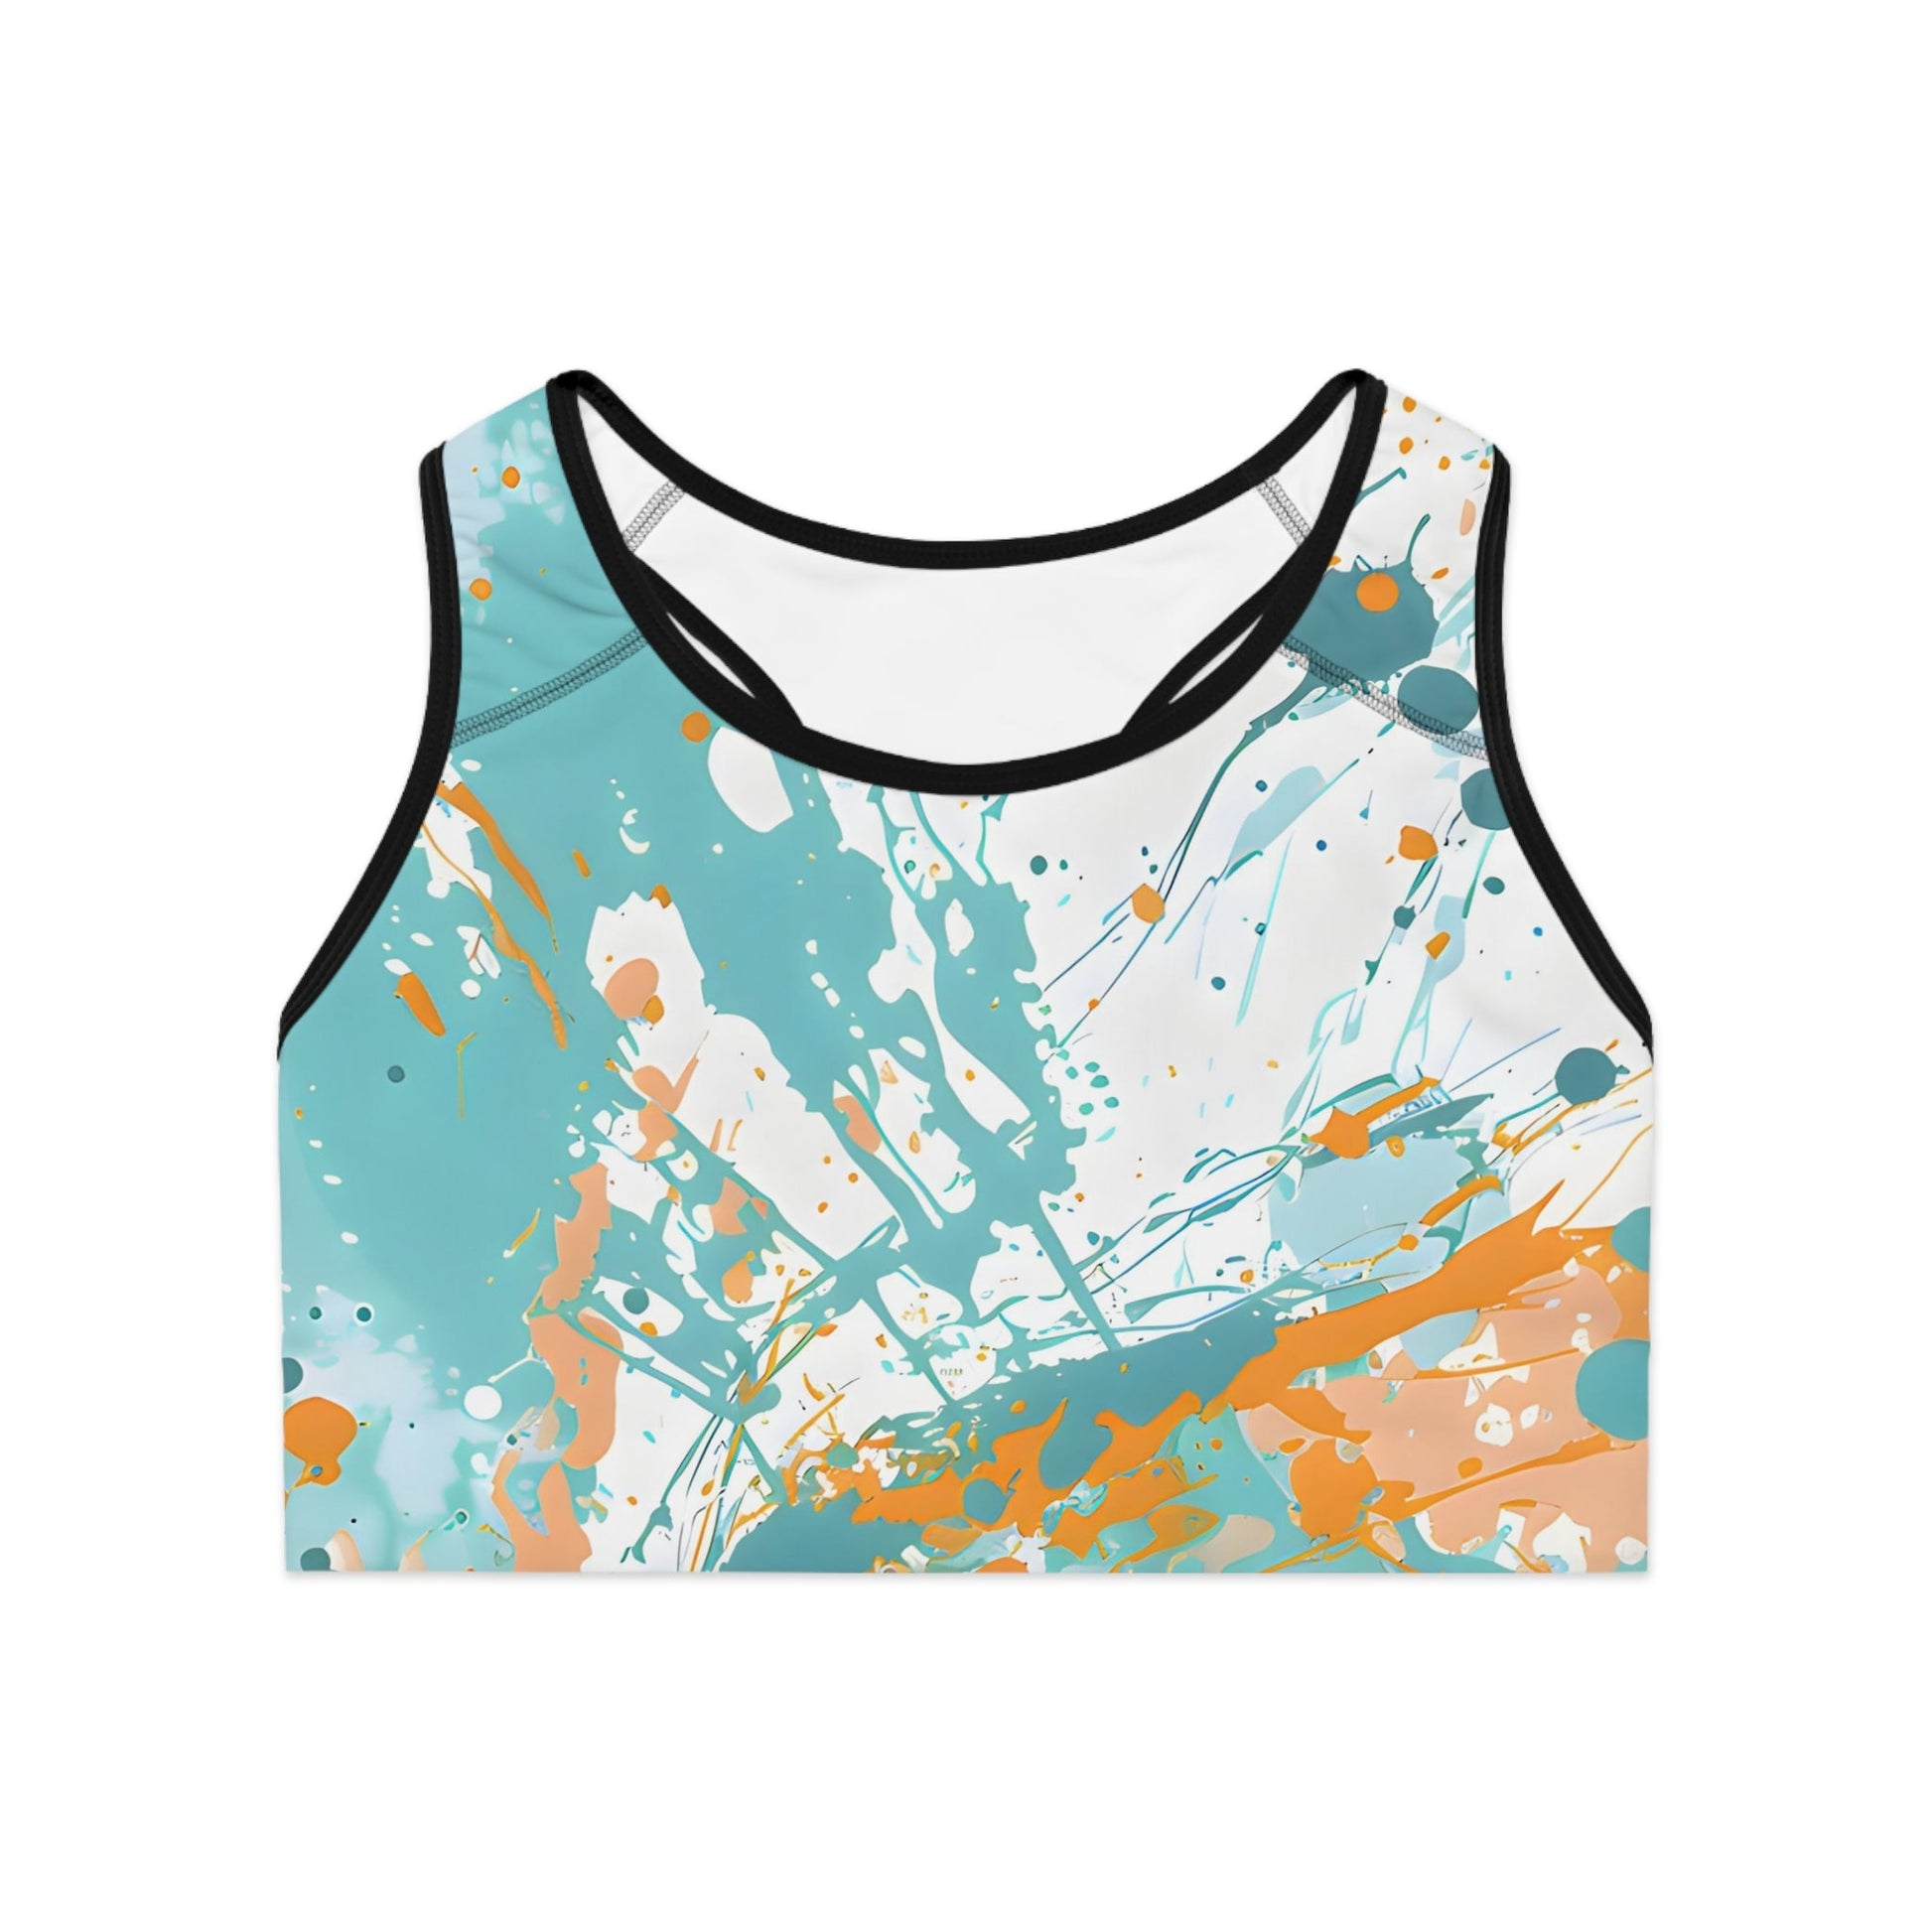 Women's Splash Turquoise Sports Bra - Sports Bras - Taigora Activewear